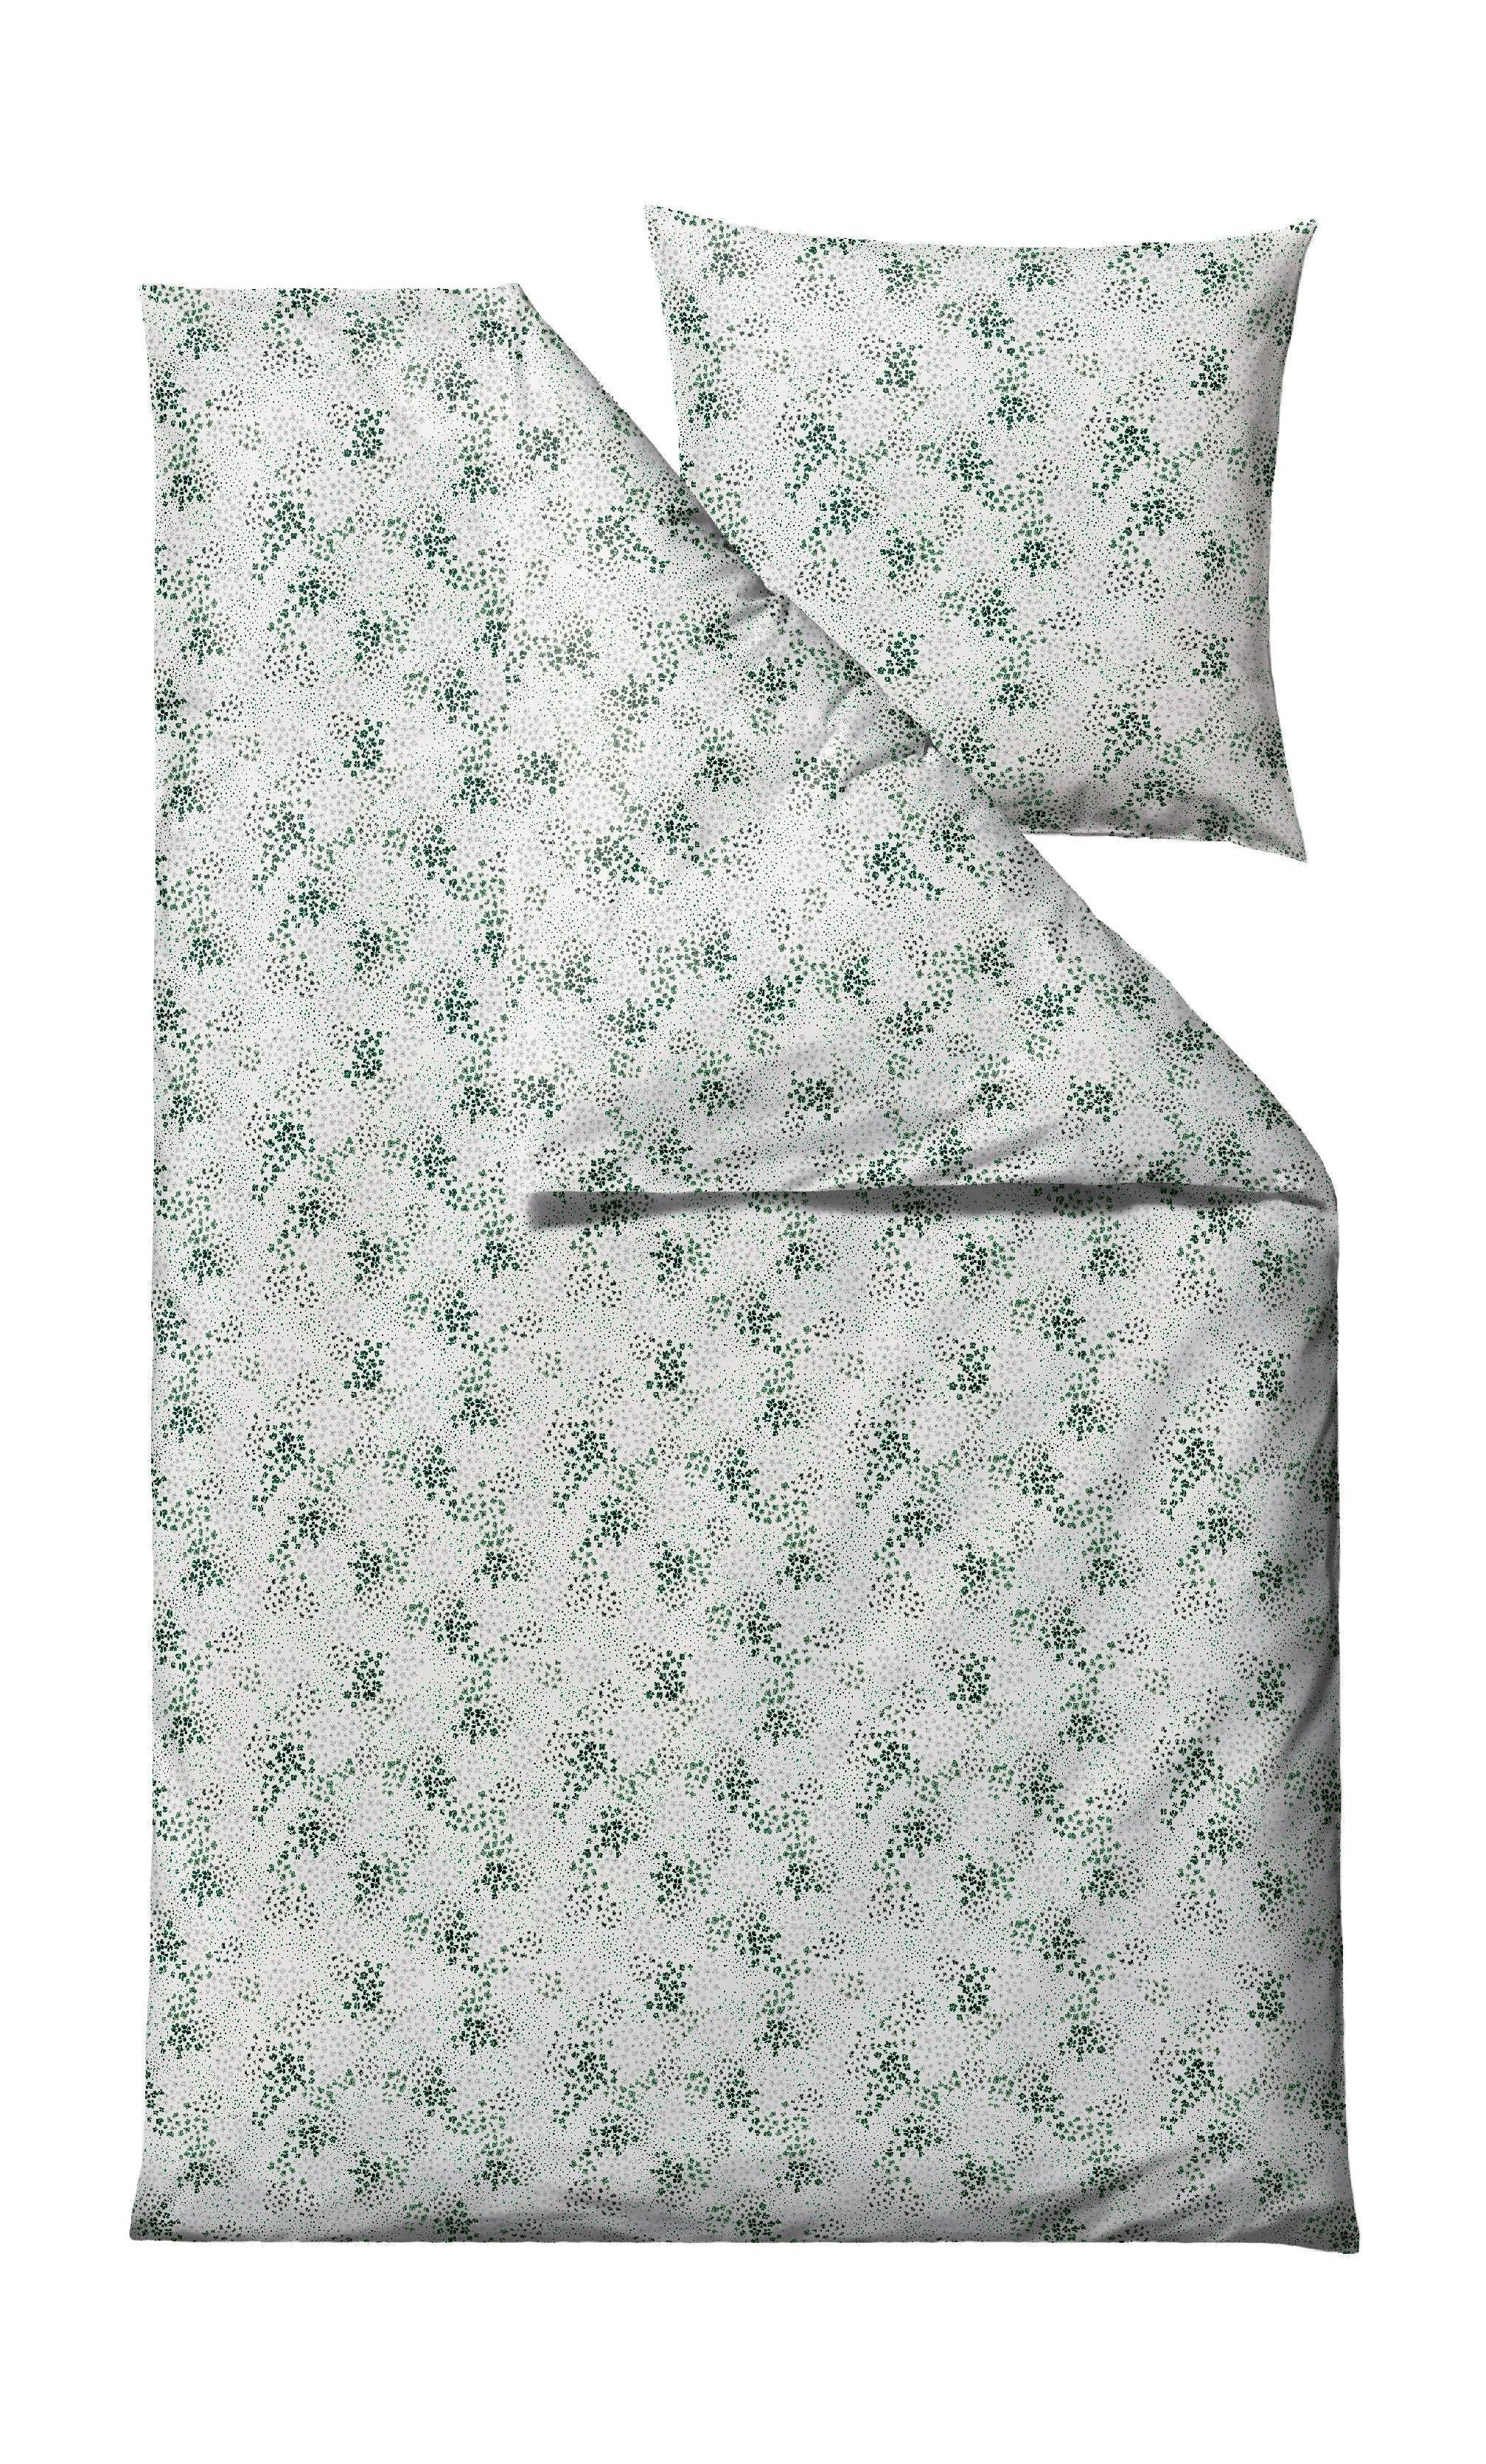 Söstahl viola sängkläder 140 x 220 cm, grönt